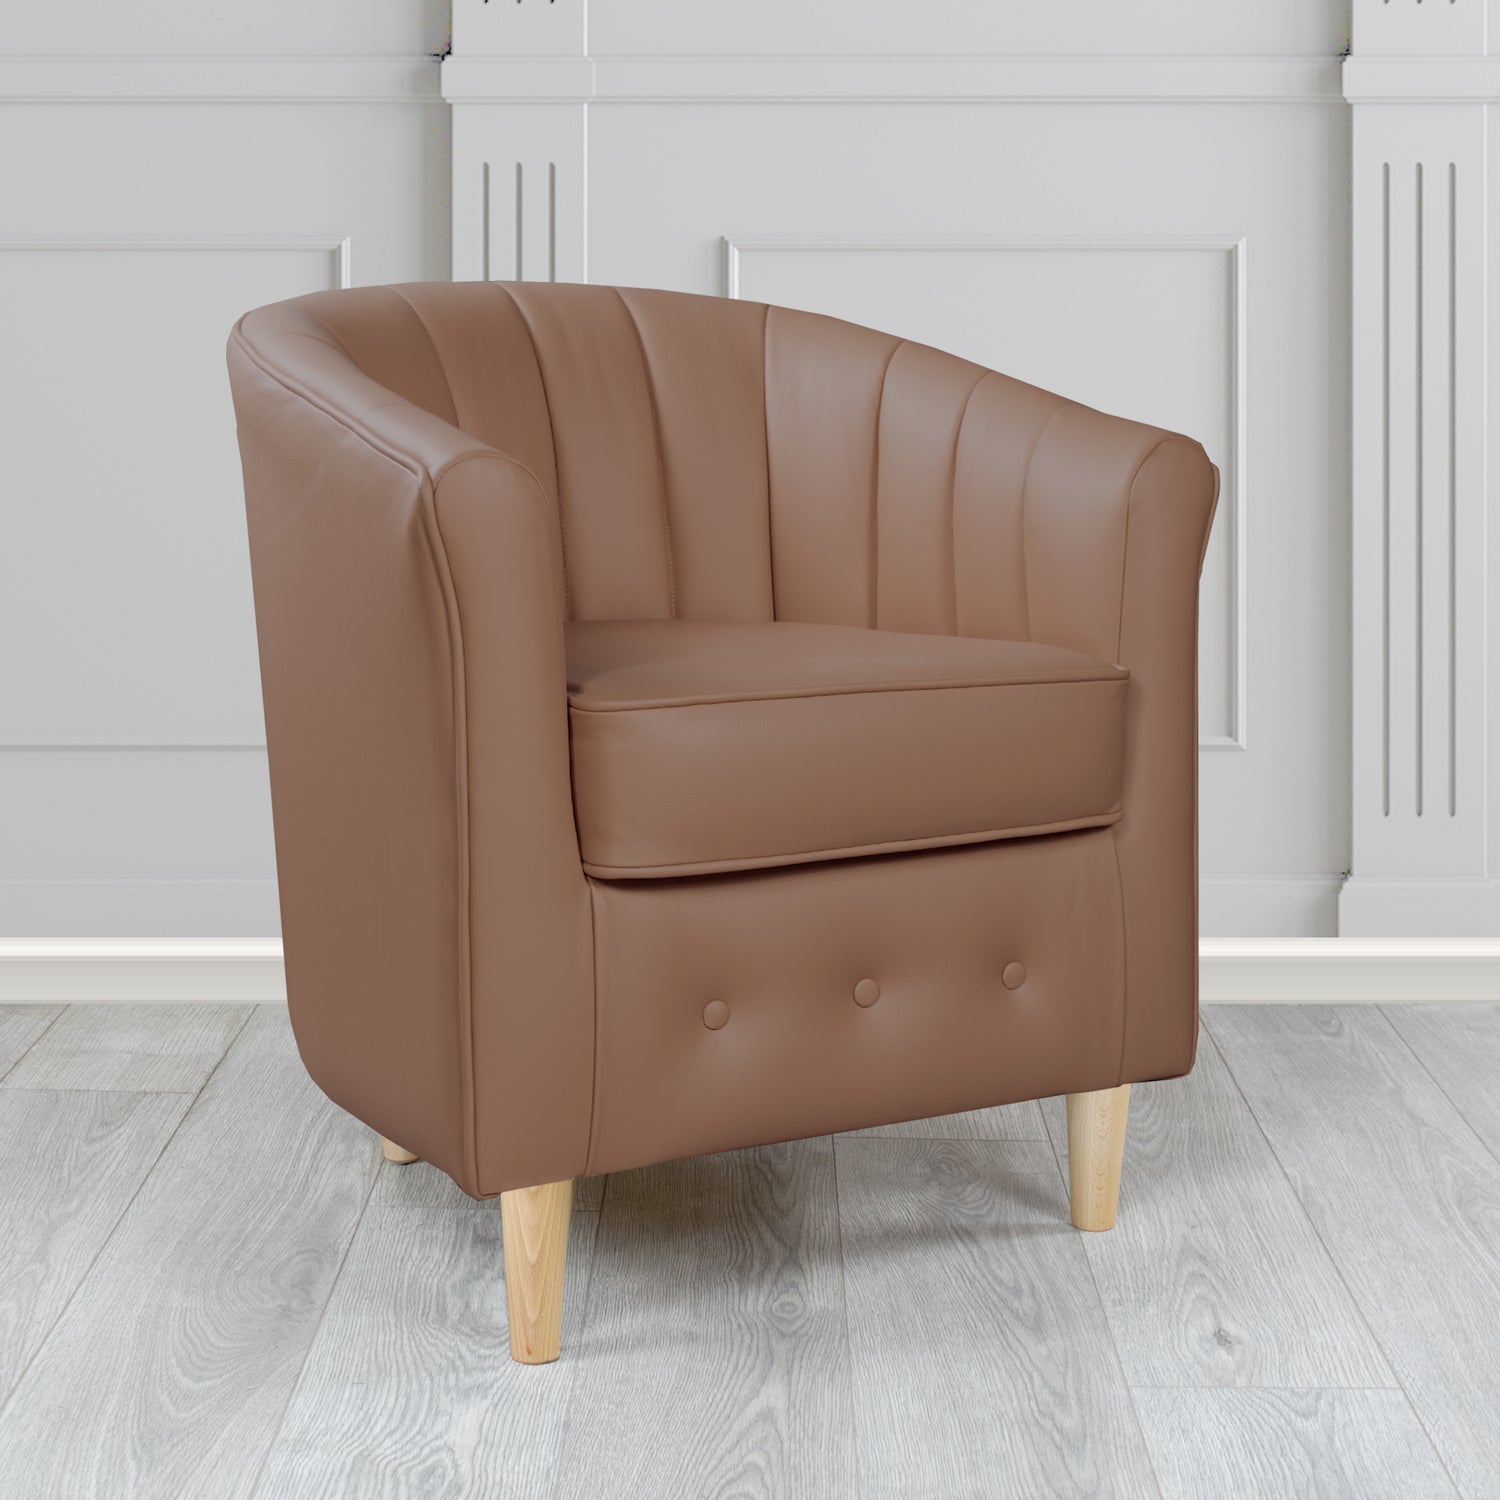 Doha Tub Chair in Vele Sole Brown Crib 5 Genuine Leather